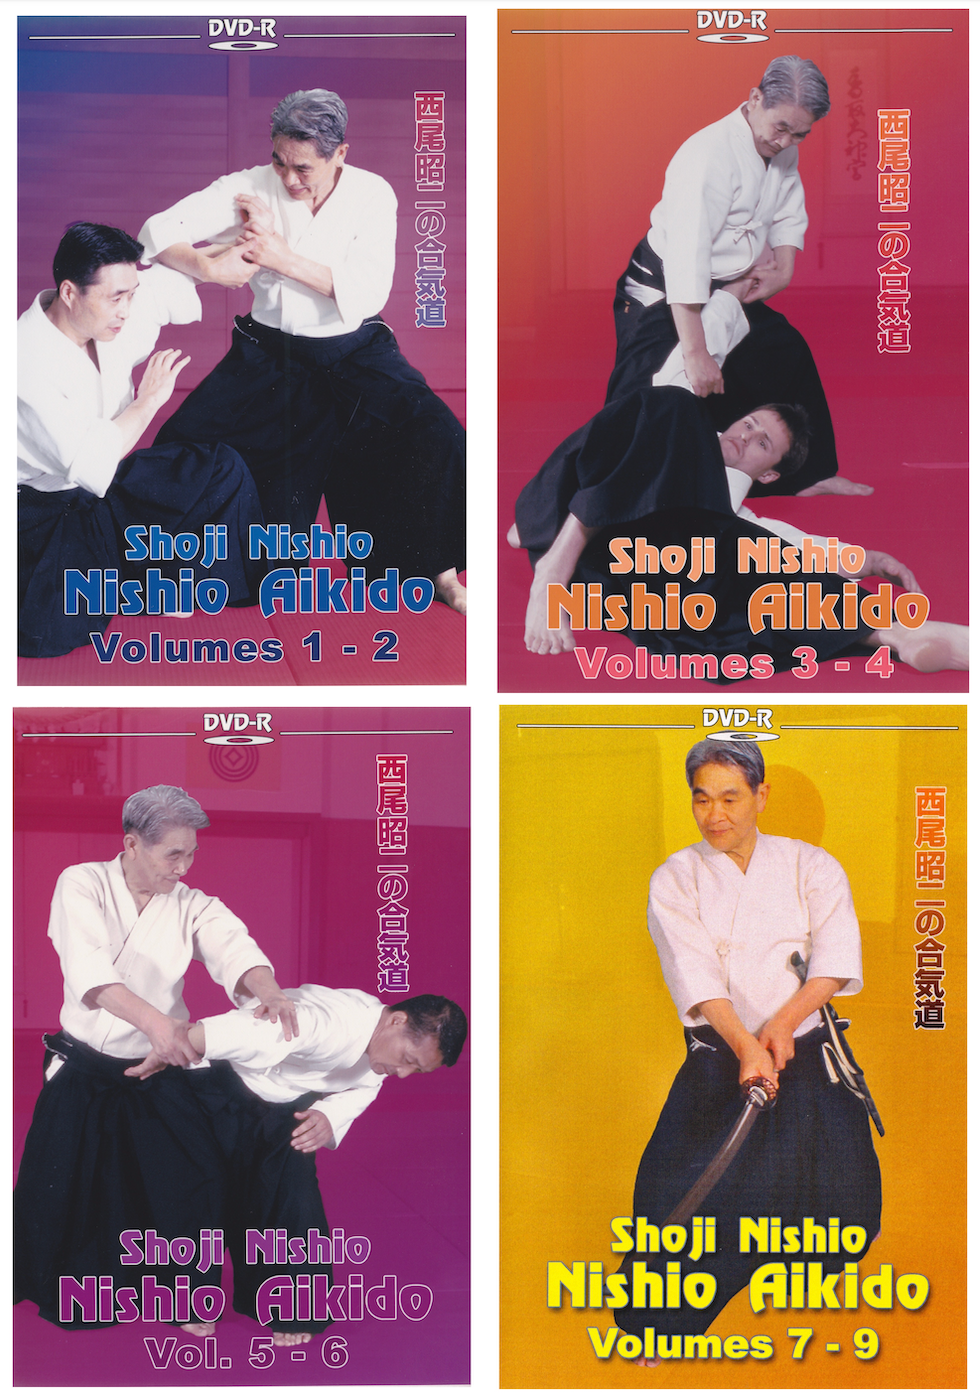 Nishio Aikido 9 Volume DVD Set by Shoji Nishio (Preowned) - Budovideos Inc